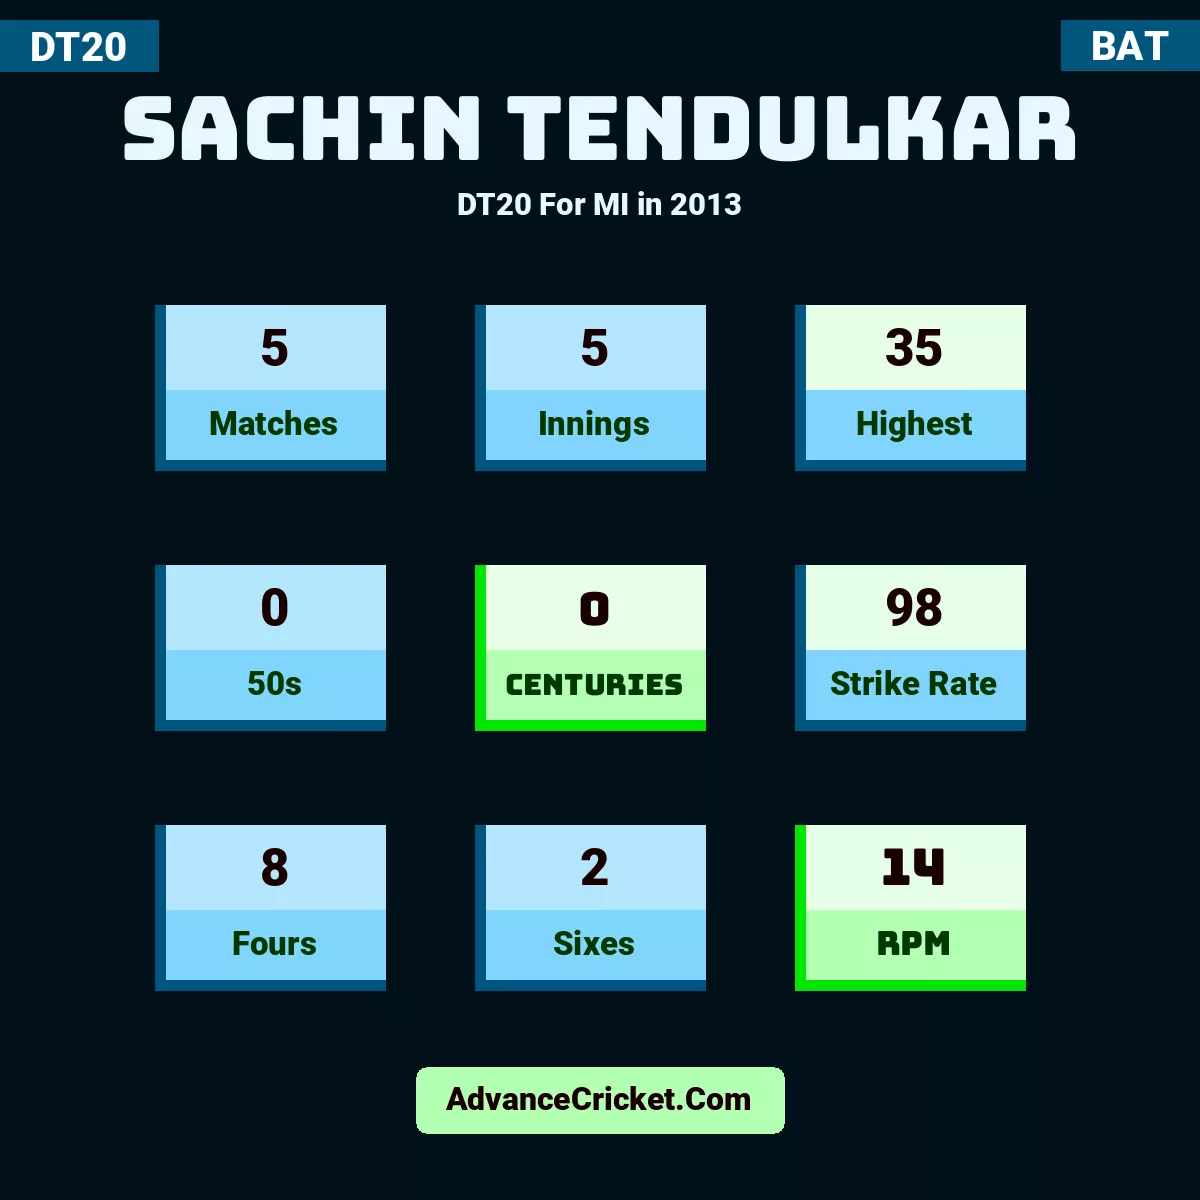 Sachin Tendulkar DT20  For MI in 2013, Sachin Tendulkar played 5 matches, scored 35 runs as highest, 0 half-centuries, and 0 centuries, with a strike rate of 98. S.Tendulkar hit 8 fours and 2 sixes, with an RPM of 14.